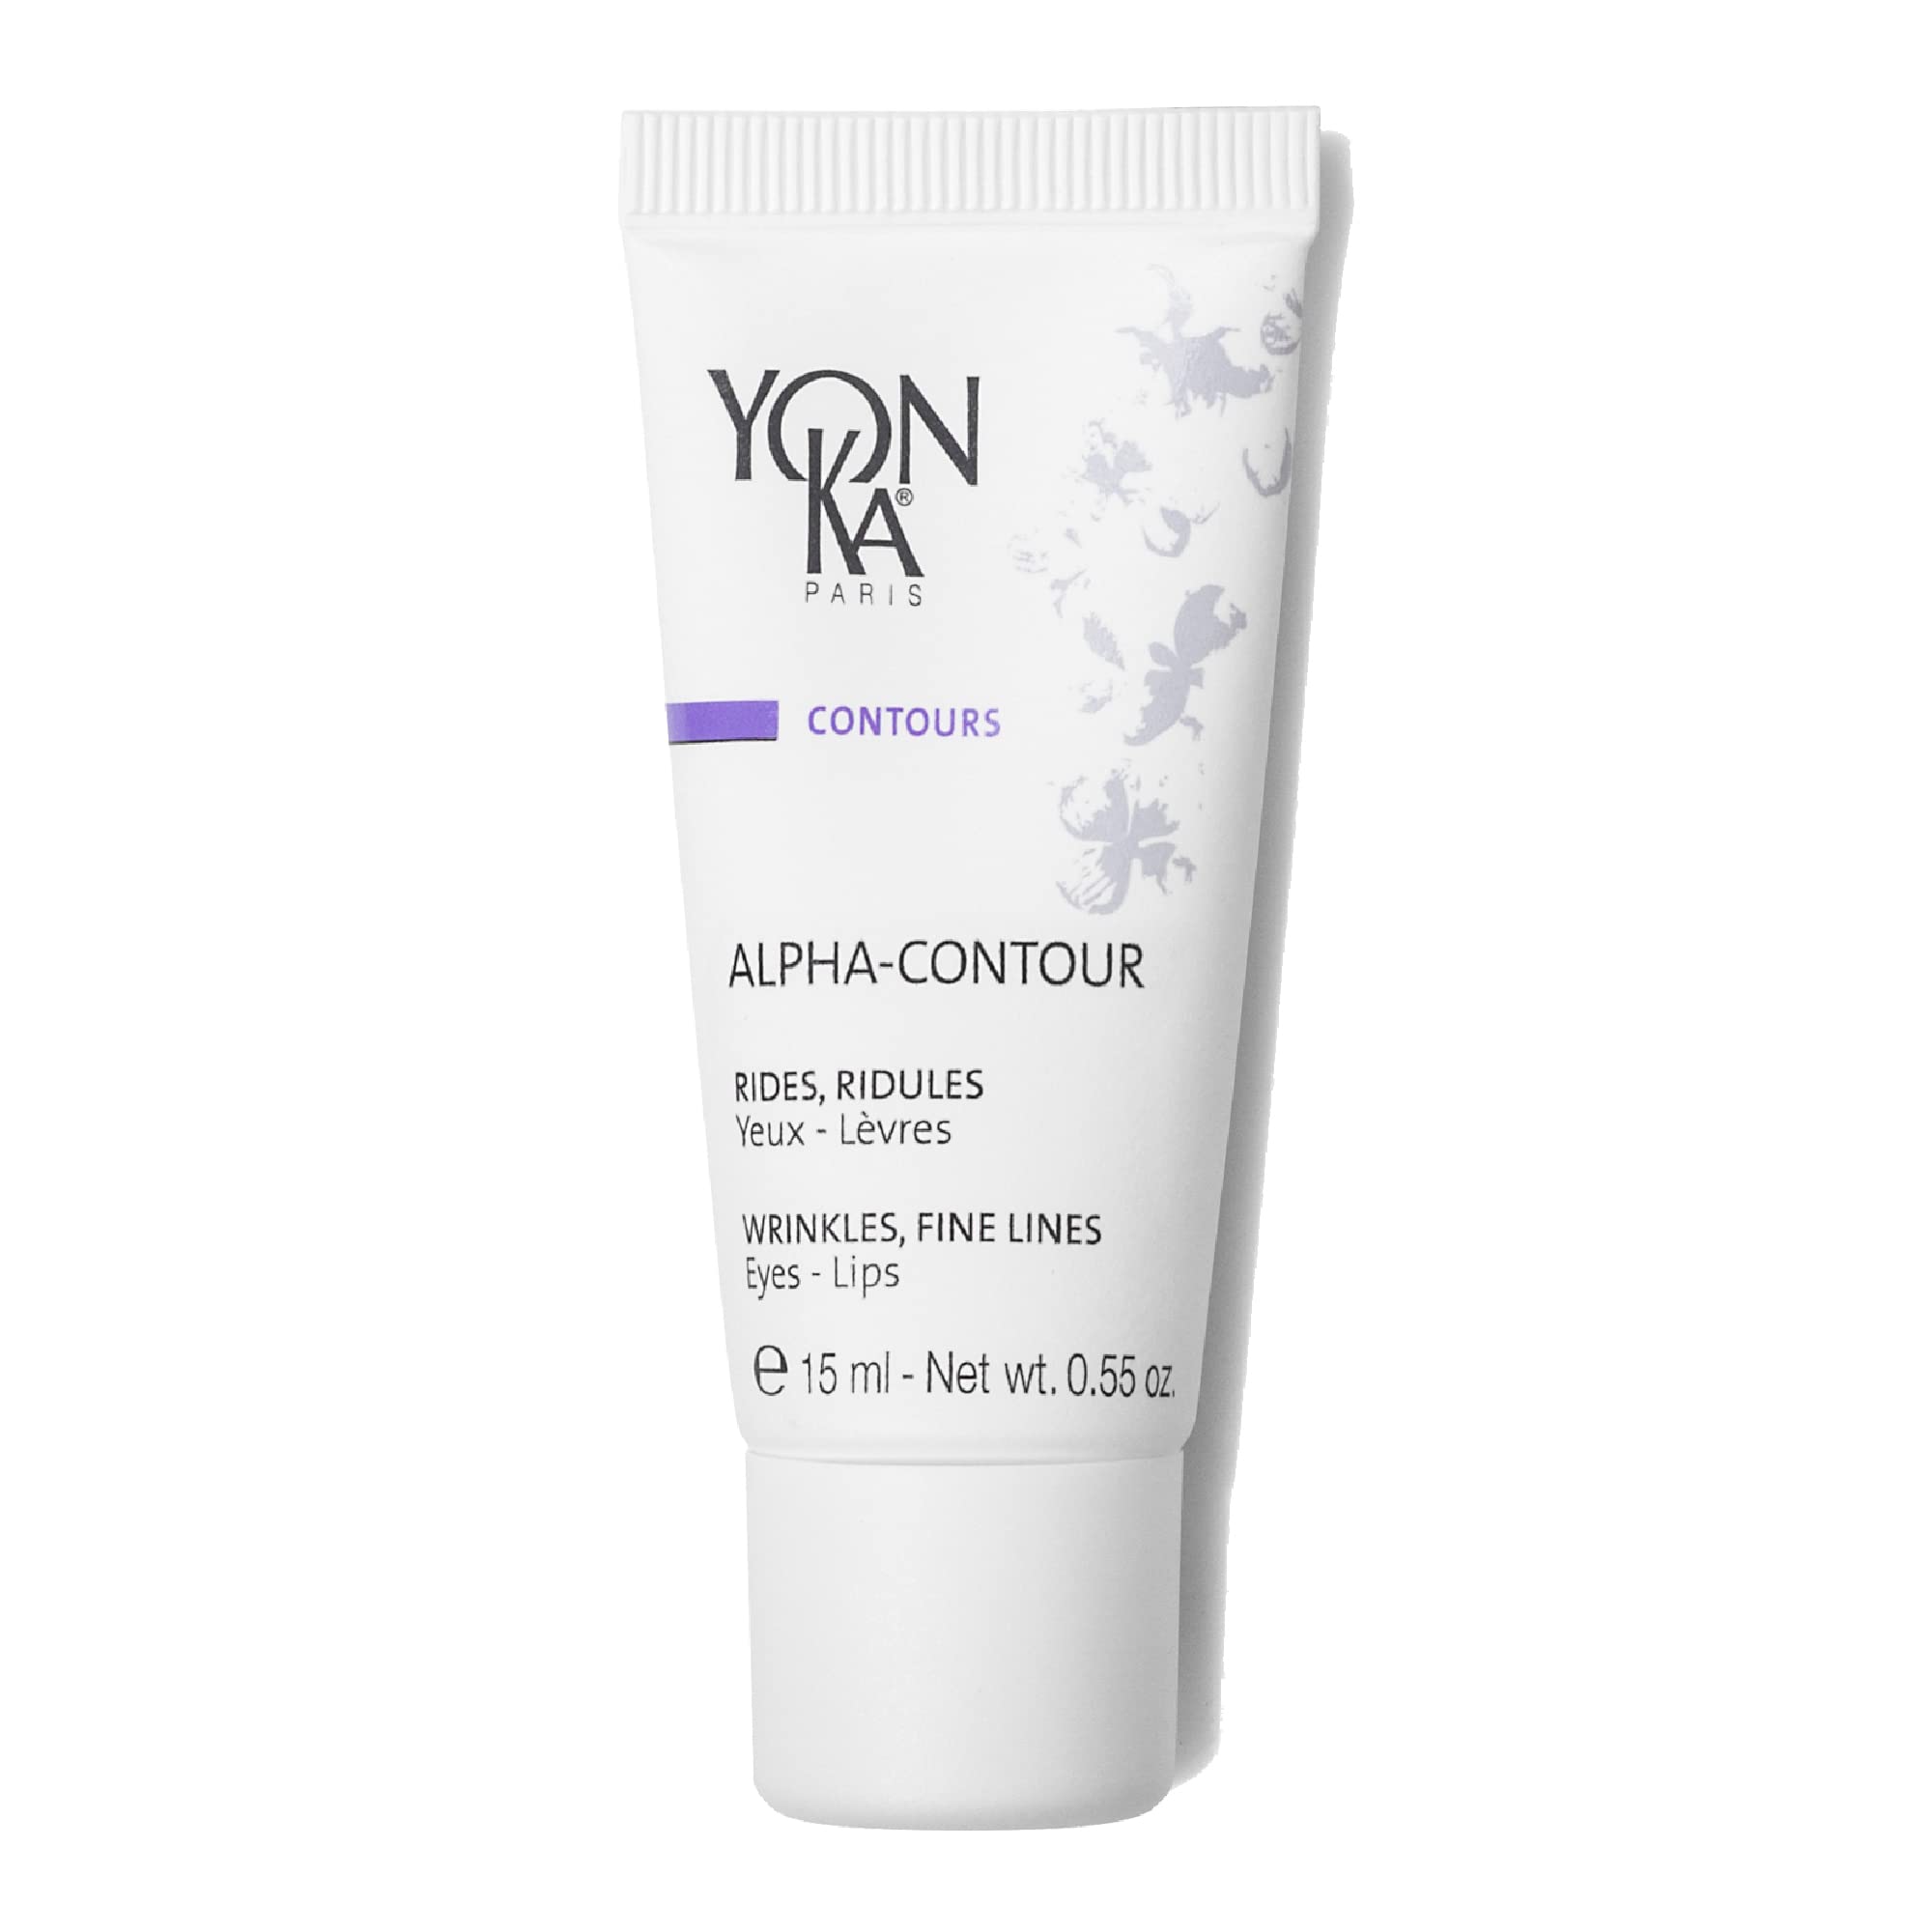 Yon-ka Contours Alpha-Contour / 0.5